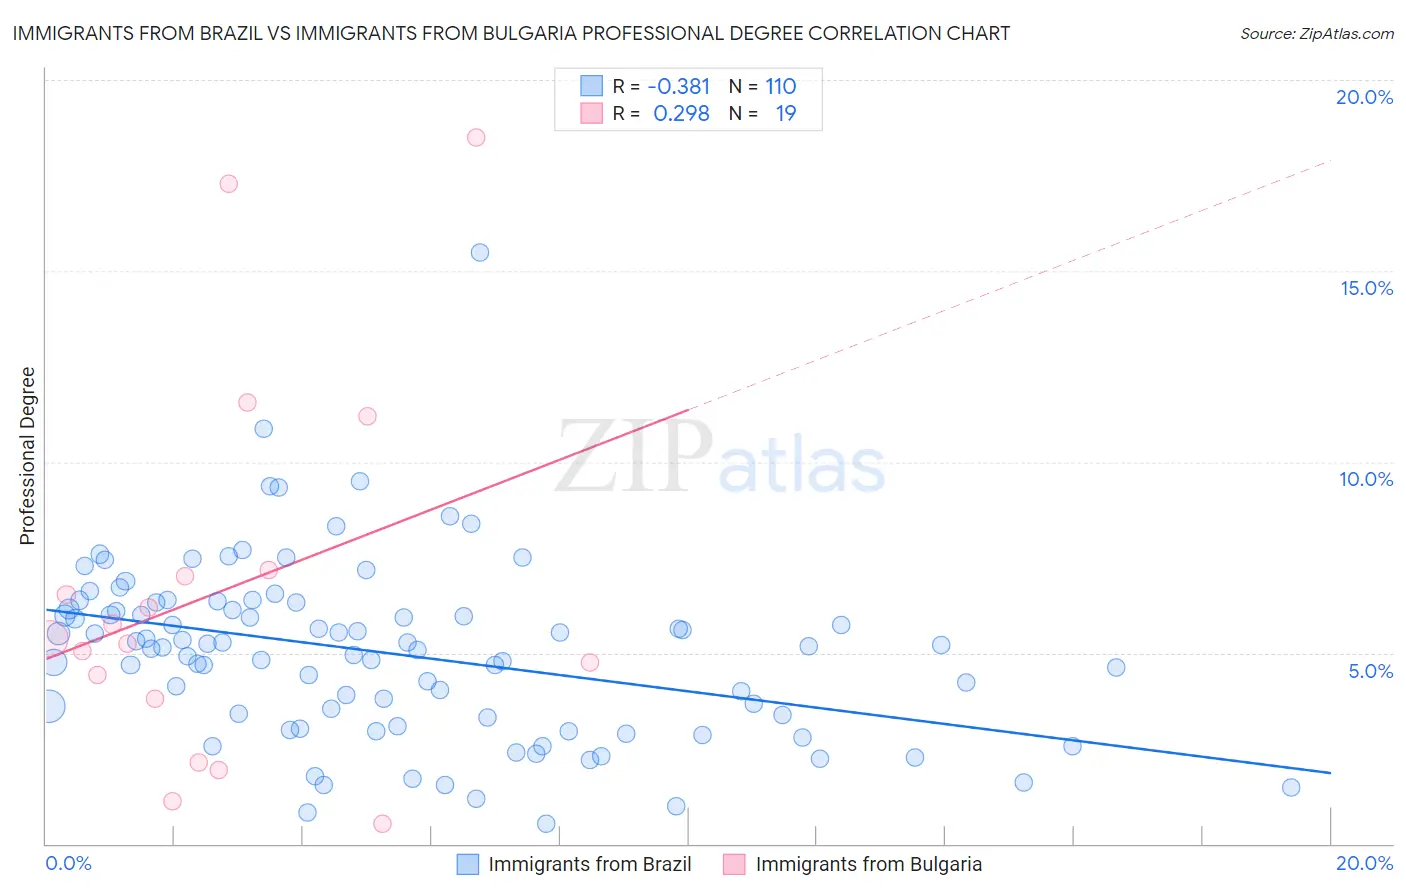 Immigrants from Brazil vs Immigrants from Bulgaria Professional Degree